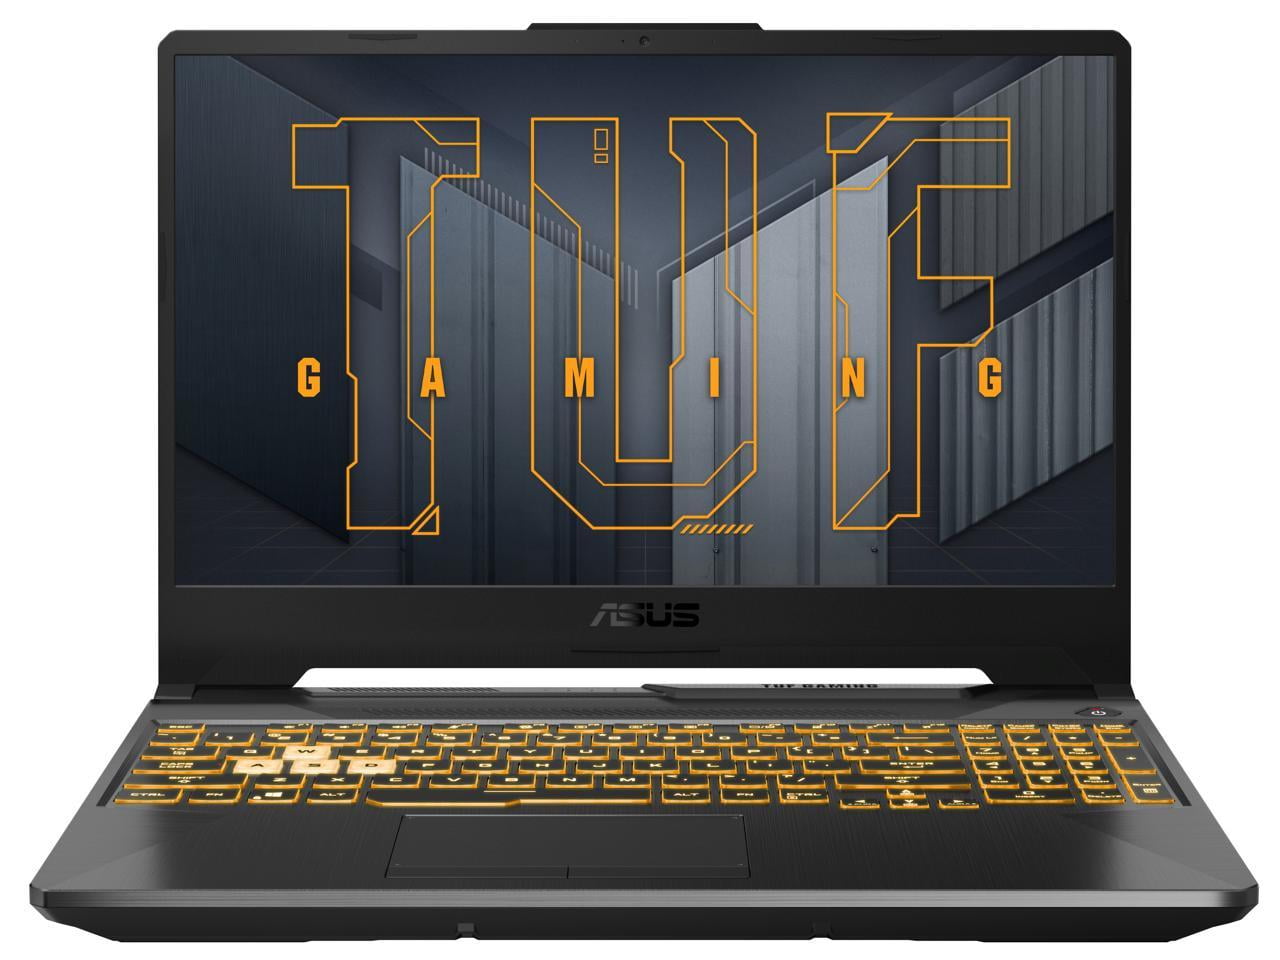 ASUS TUF Gaming F15 Gaming Laptop, 15.6” 144Hz FHD Display, Intel Core  i5-11400H Processor, GeForce RTX 2050, 8GB DDR4 RAM, 512GB PCIe SSD Gen 3